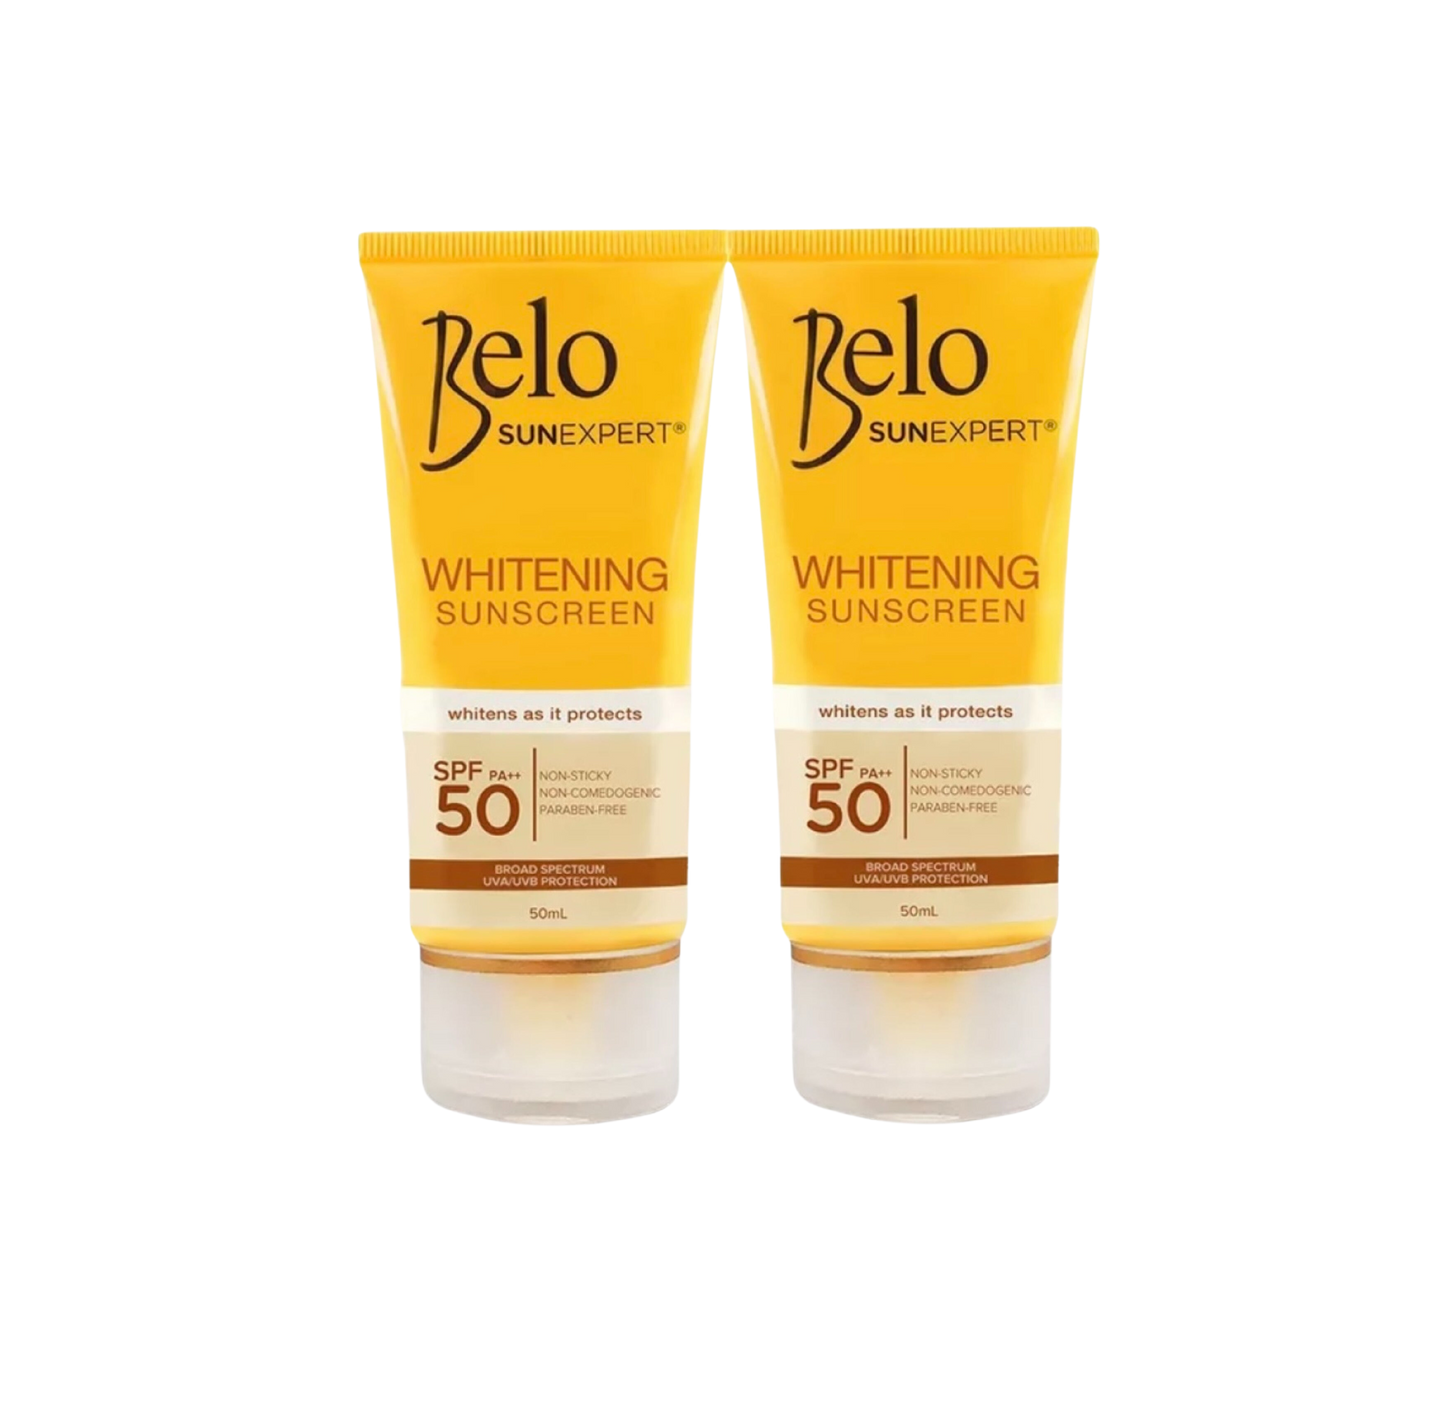 Belo Whitening Sunscreen